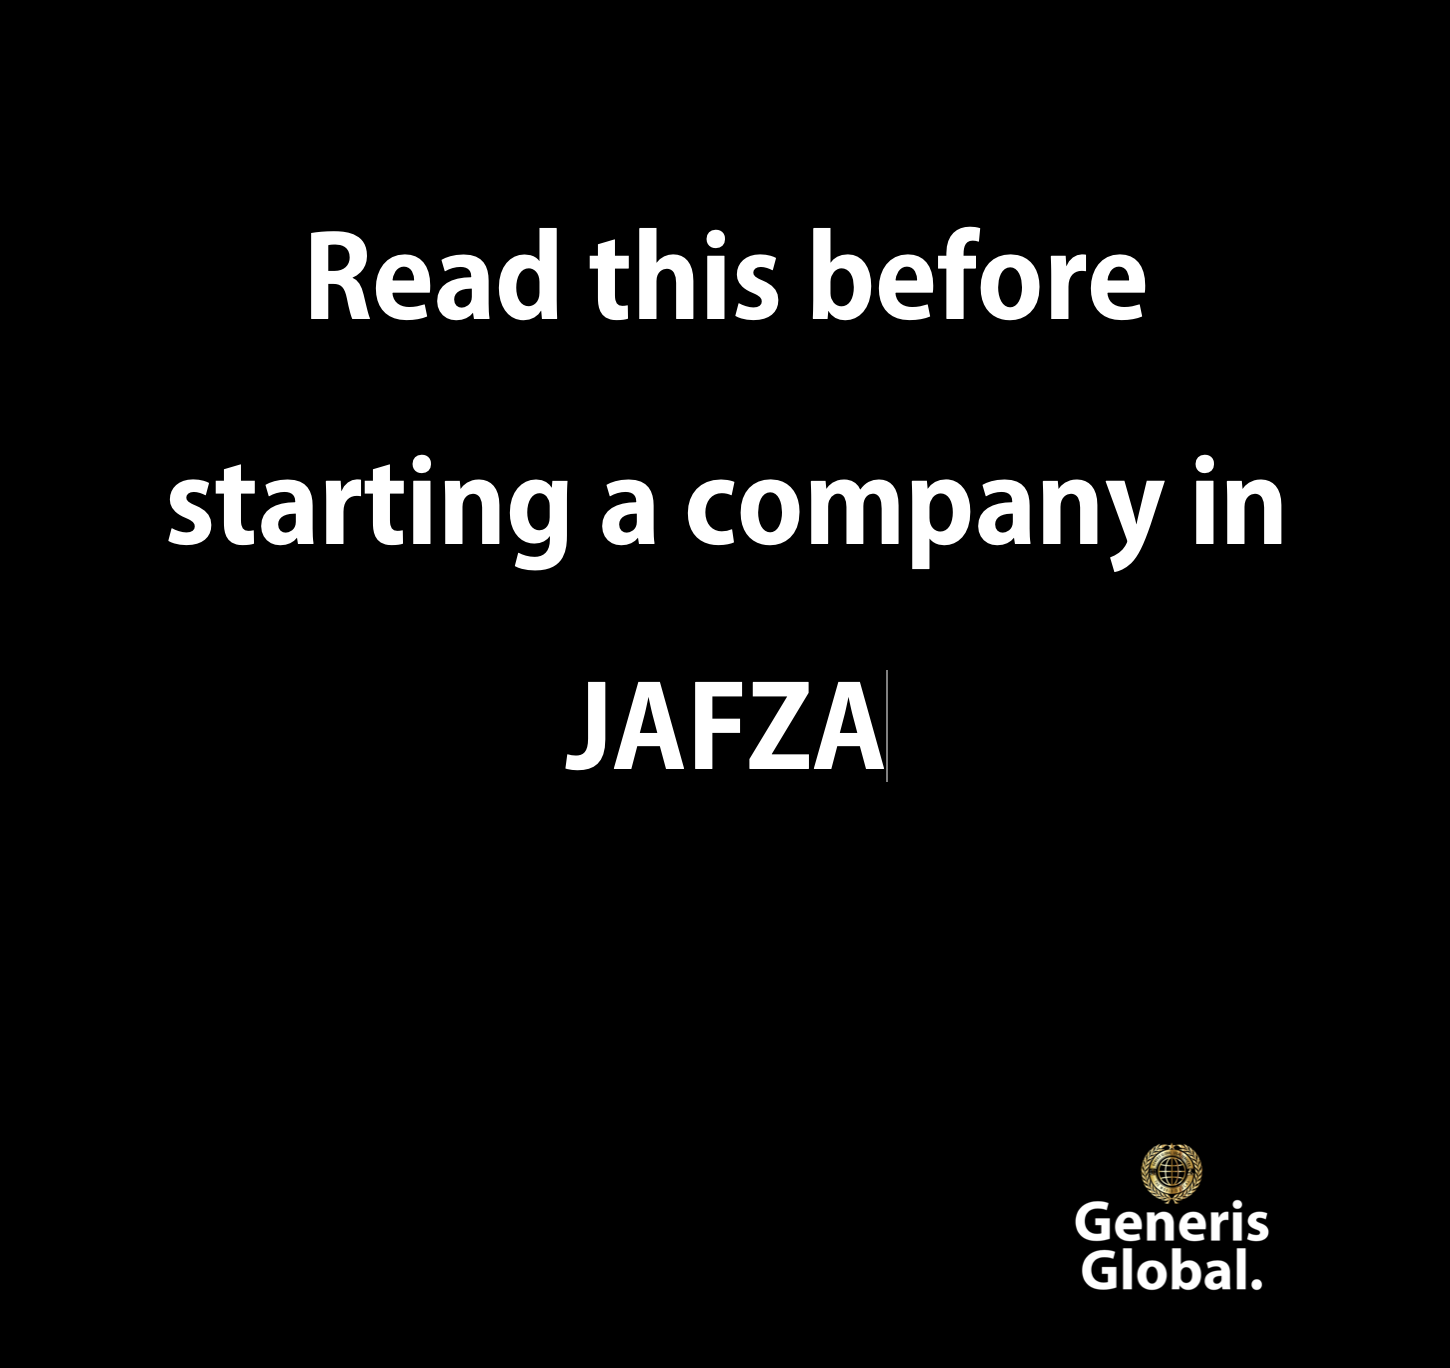 starting a company in JAFZA